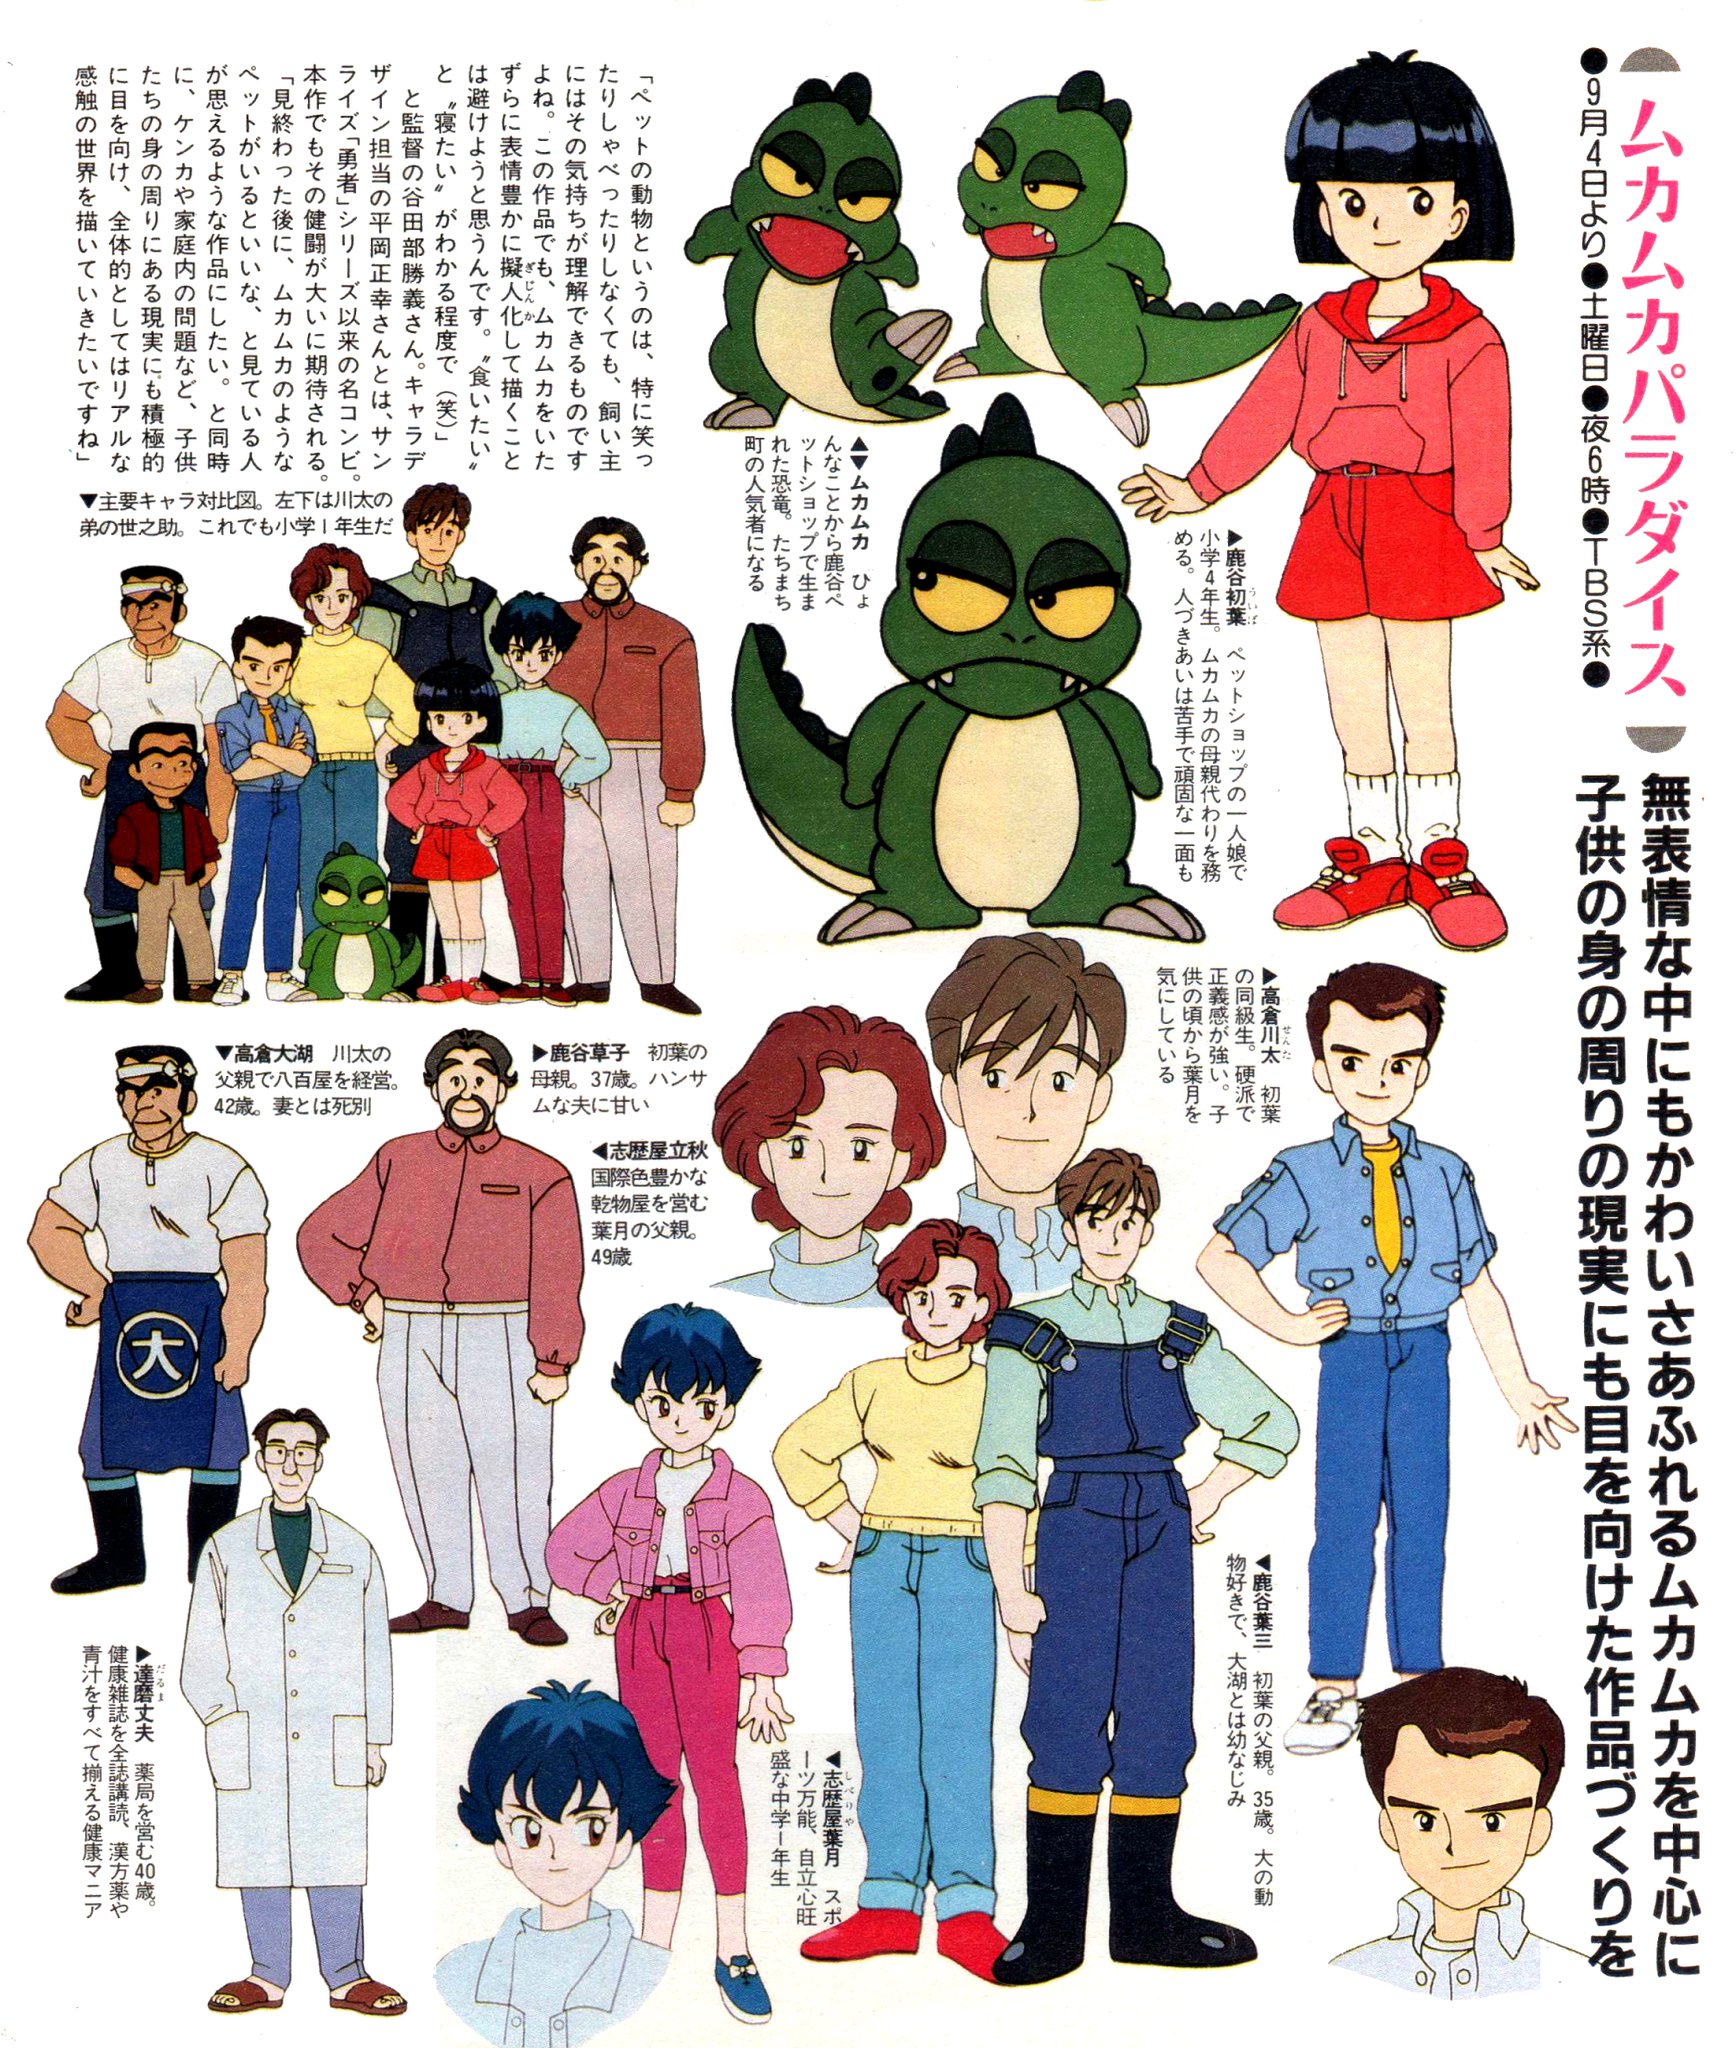 Animarchive En Twitter Muka Muka Paradise Tv Series Animage Magazine 09 1993 T Co 2je8kxg3uu